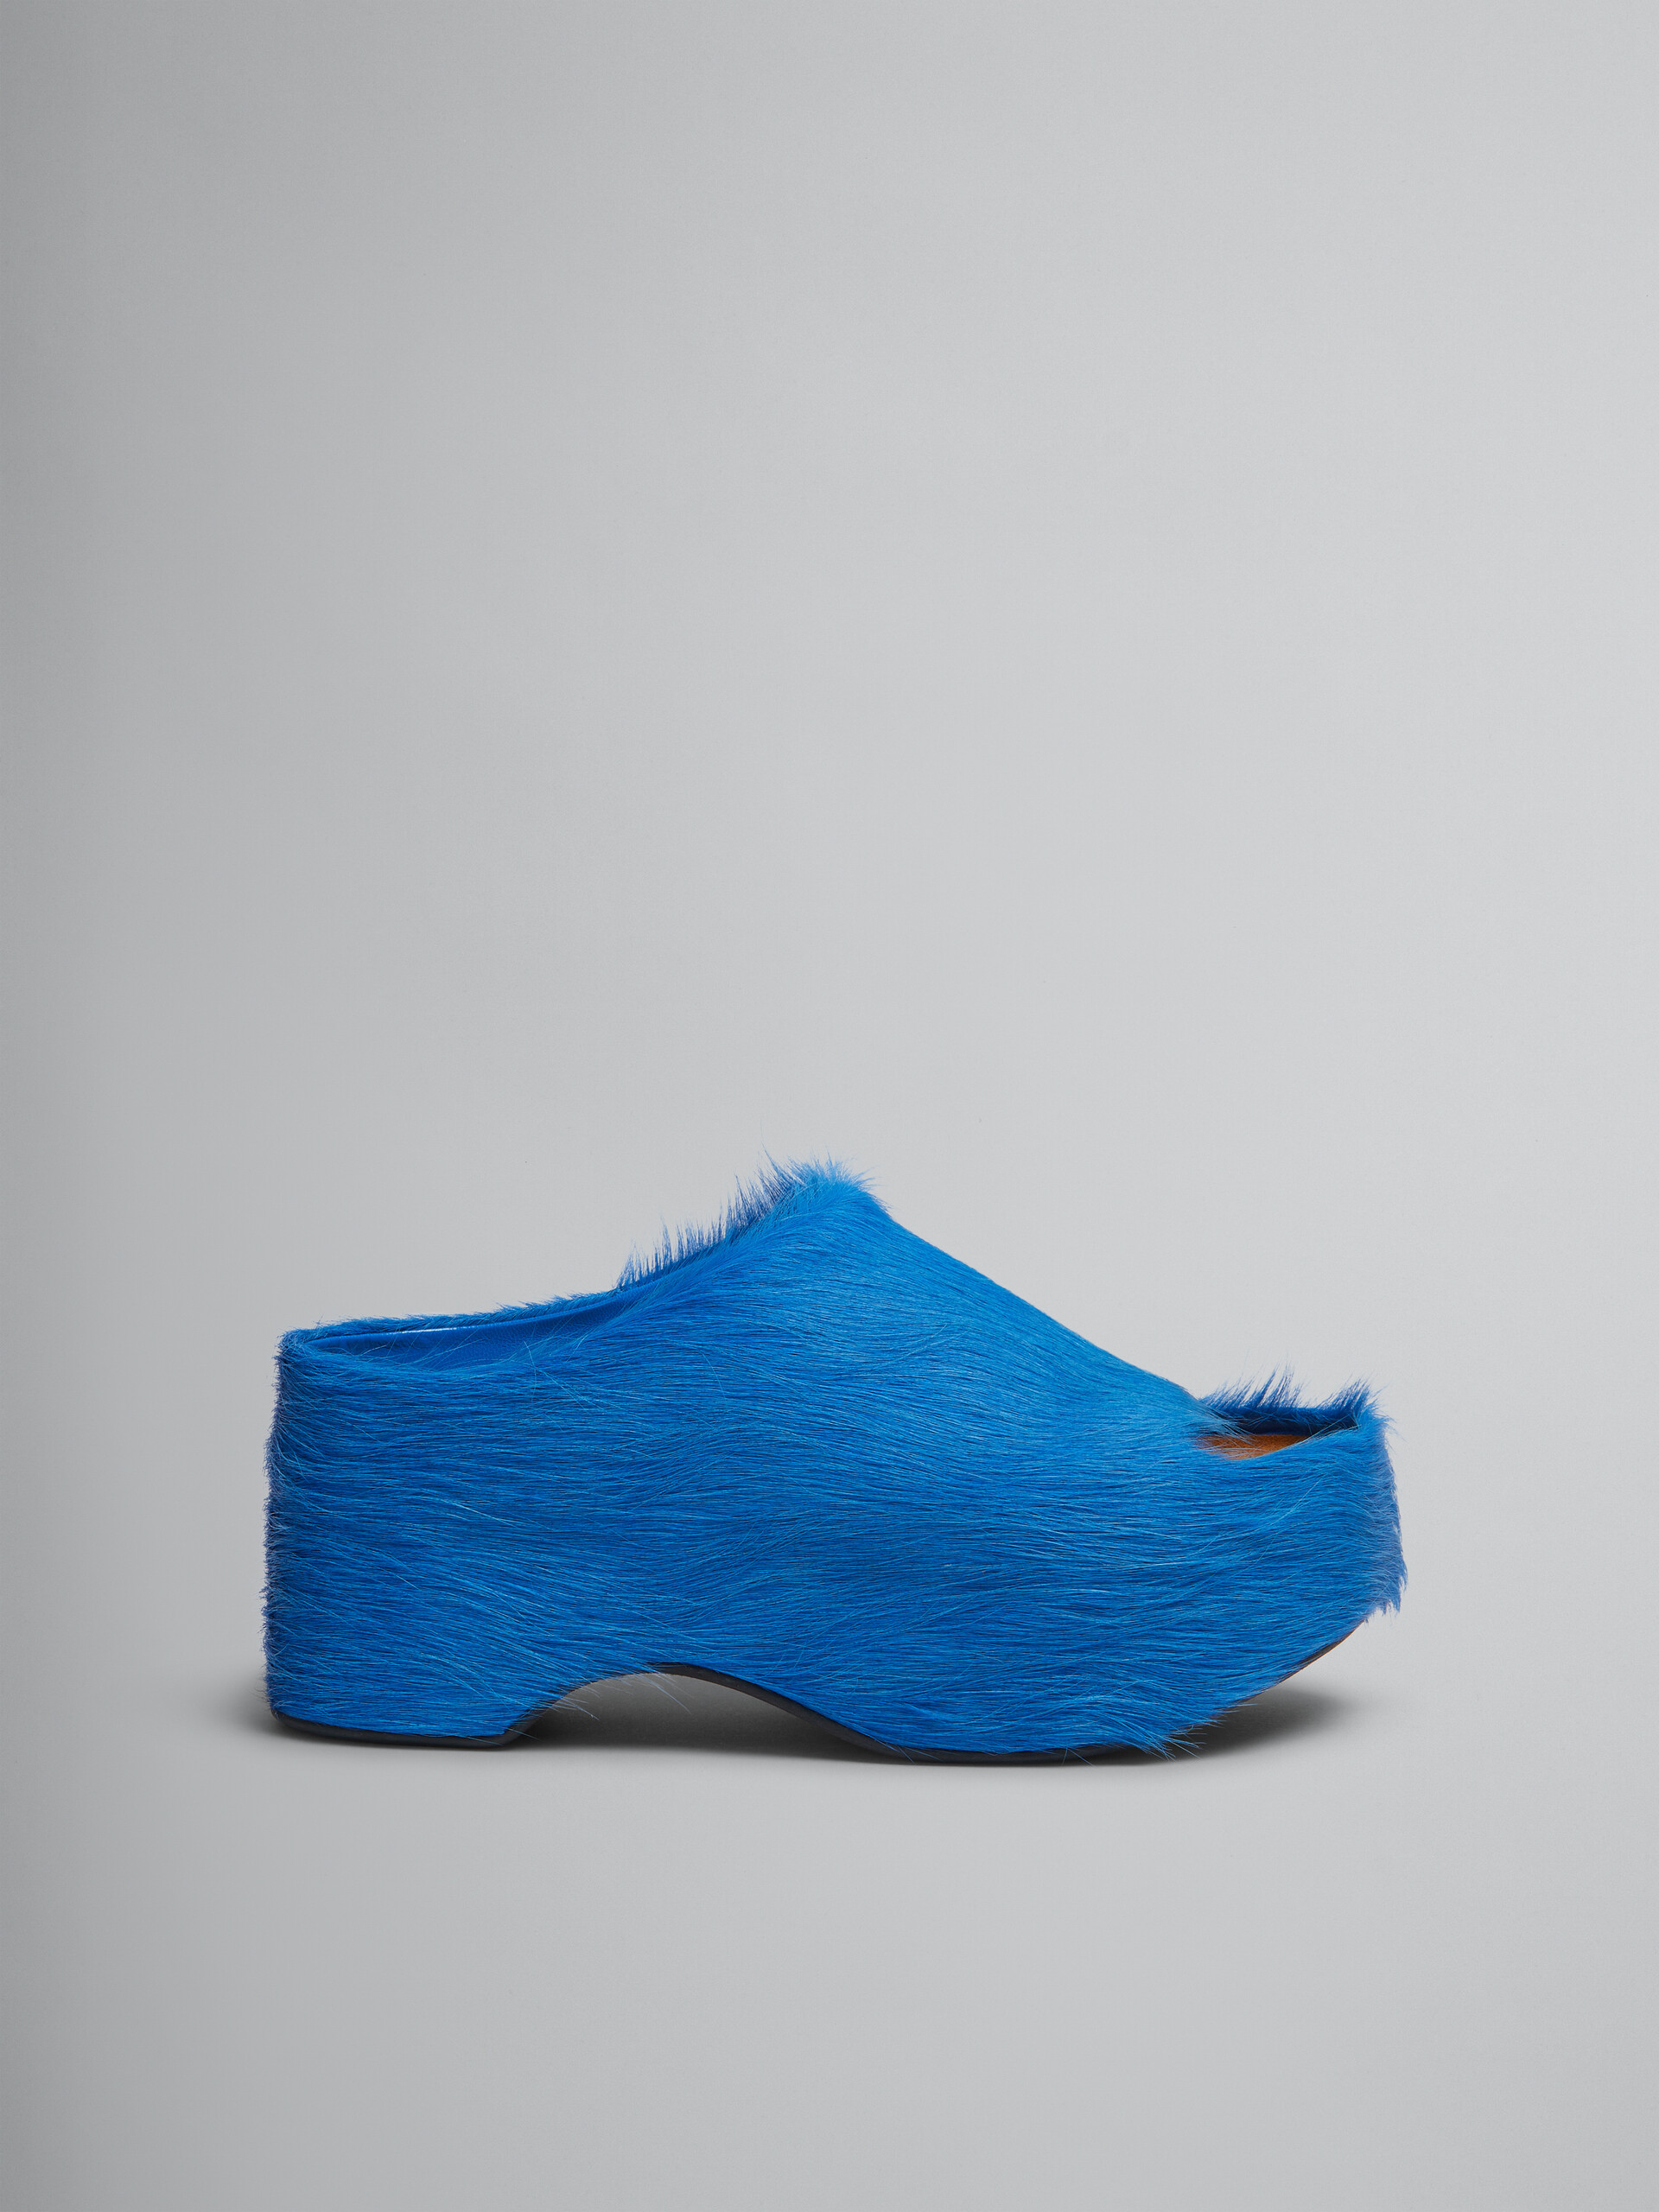 Chancla tipo zueco gruesa azul de piel de becerro de pelo largo - Sandalias - Image 1